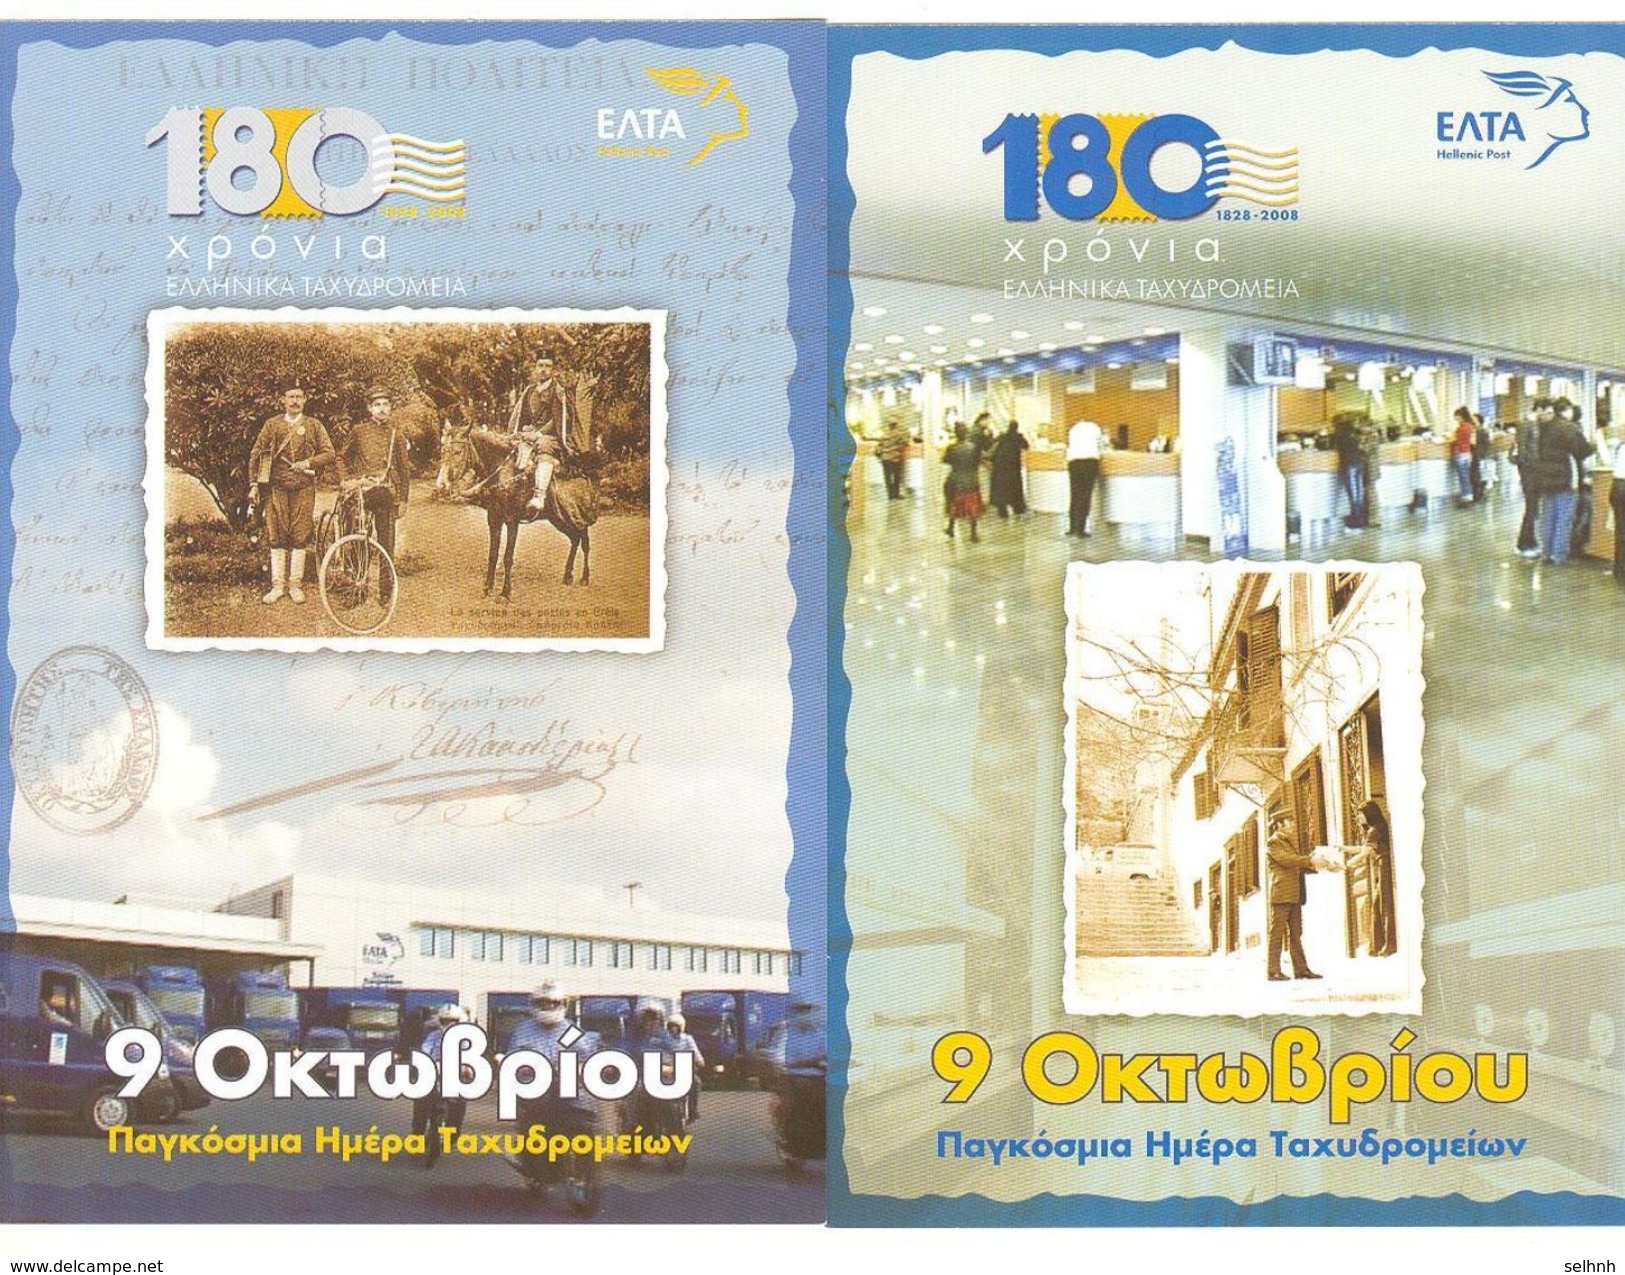 GREECE GRECE GREEK COMMEMORATIVE POSTMARK 70 YEARS OF PHILATELIC SOSIETY OF CORFU 9-10-2001 ON CARD FROM ELTA - Flammes & Oblitérations